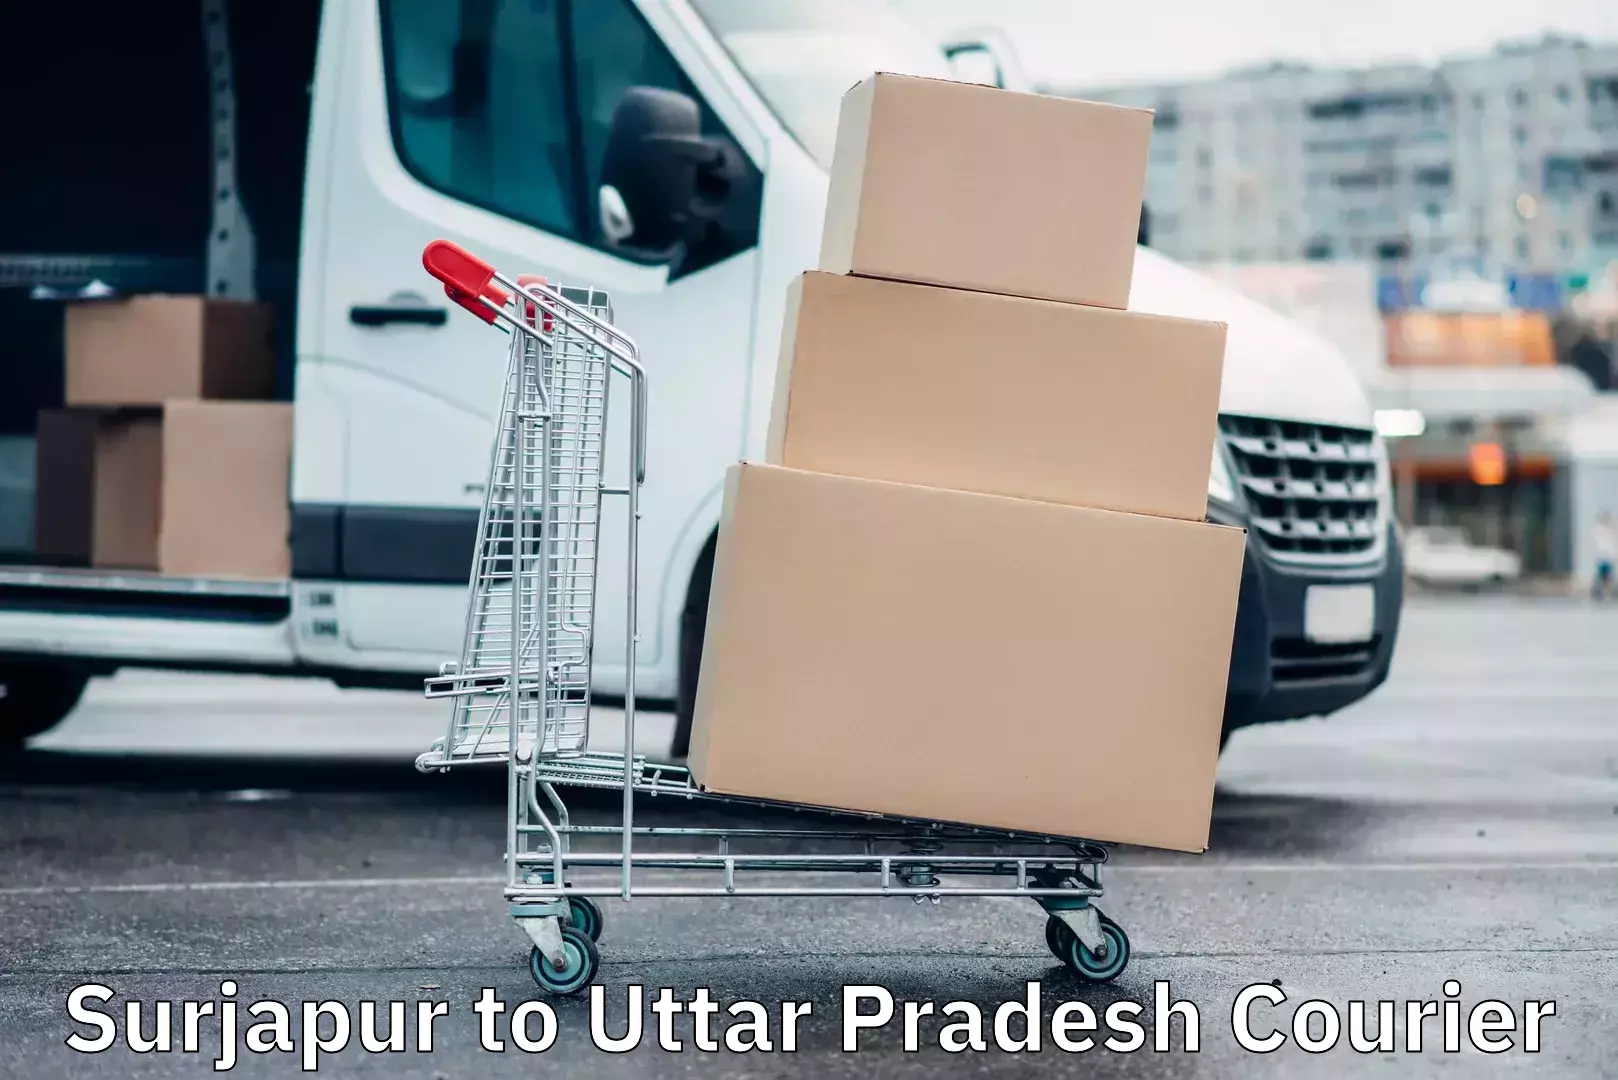 Efficient cargo handling in Surjapur to Uttar Pradesh